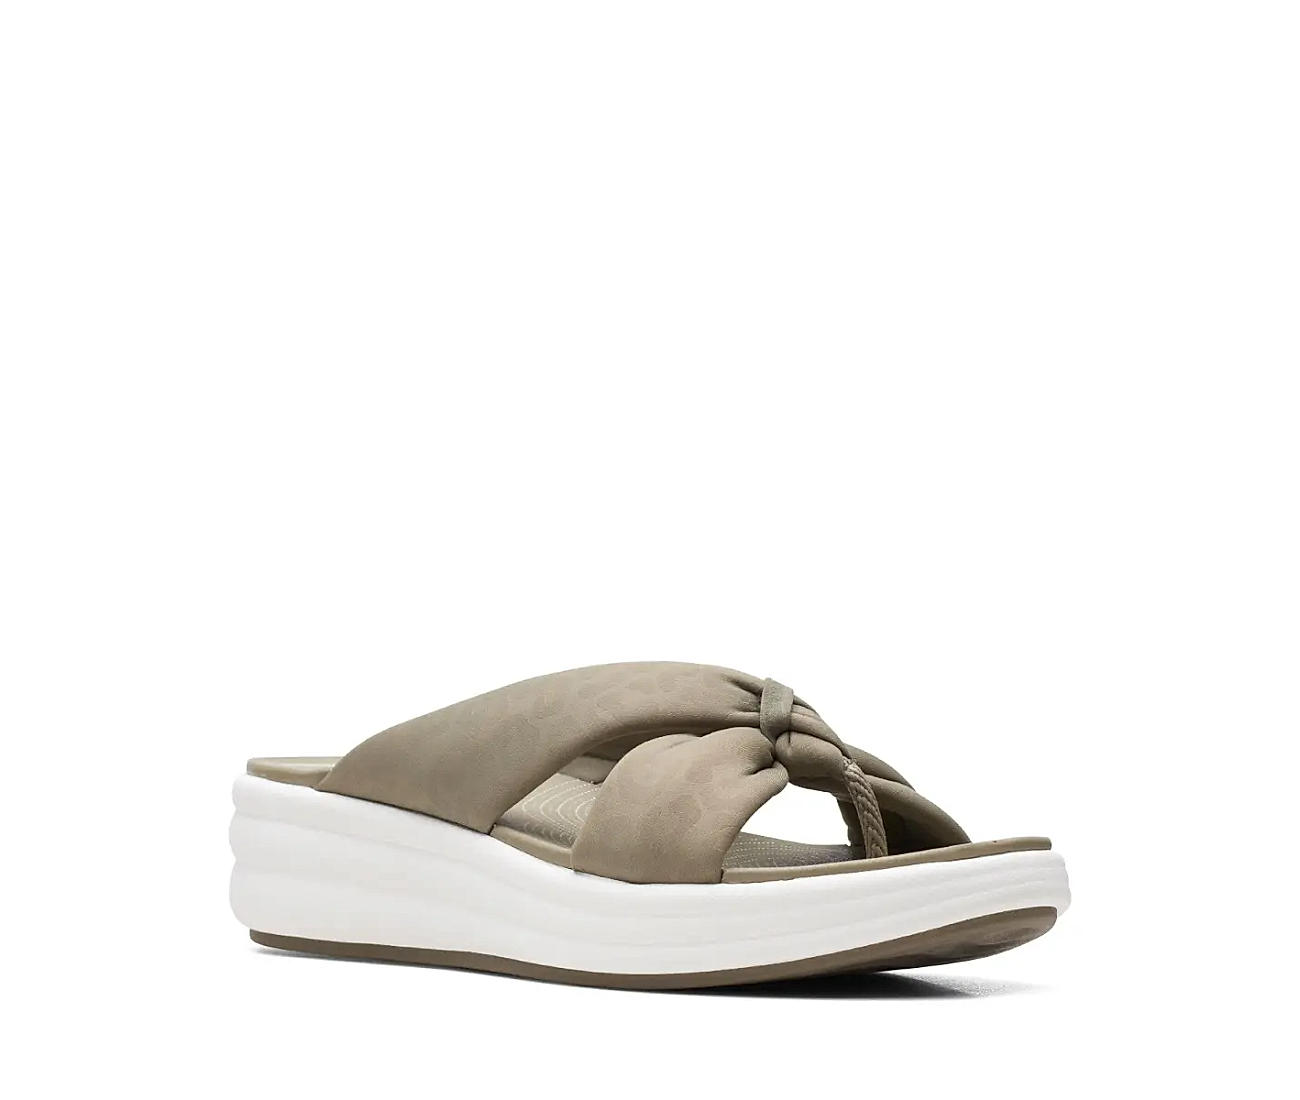 Sandals Flip Flops By Clarks Size: 8